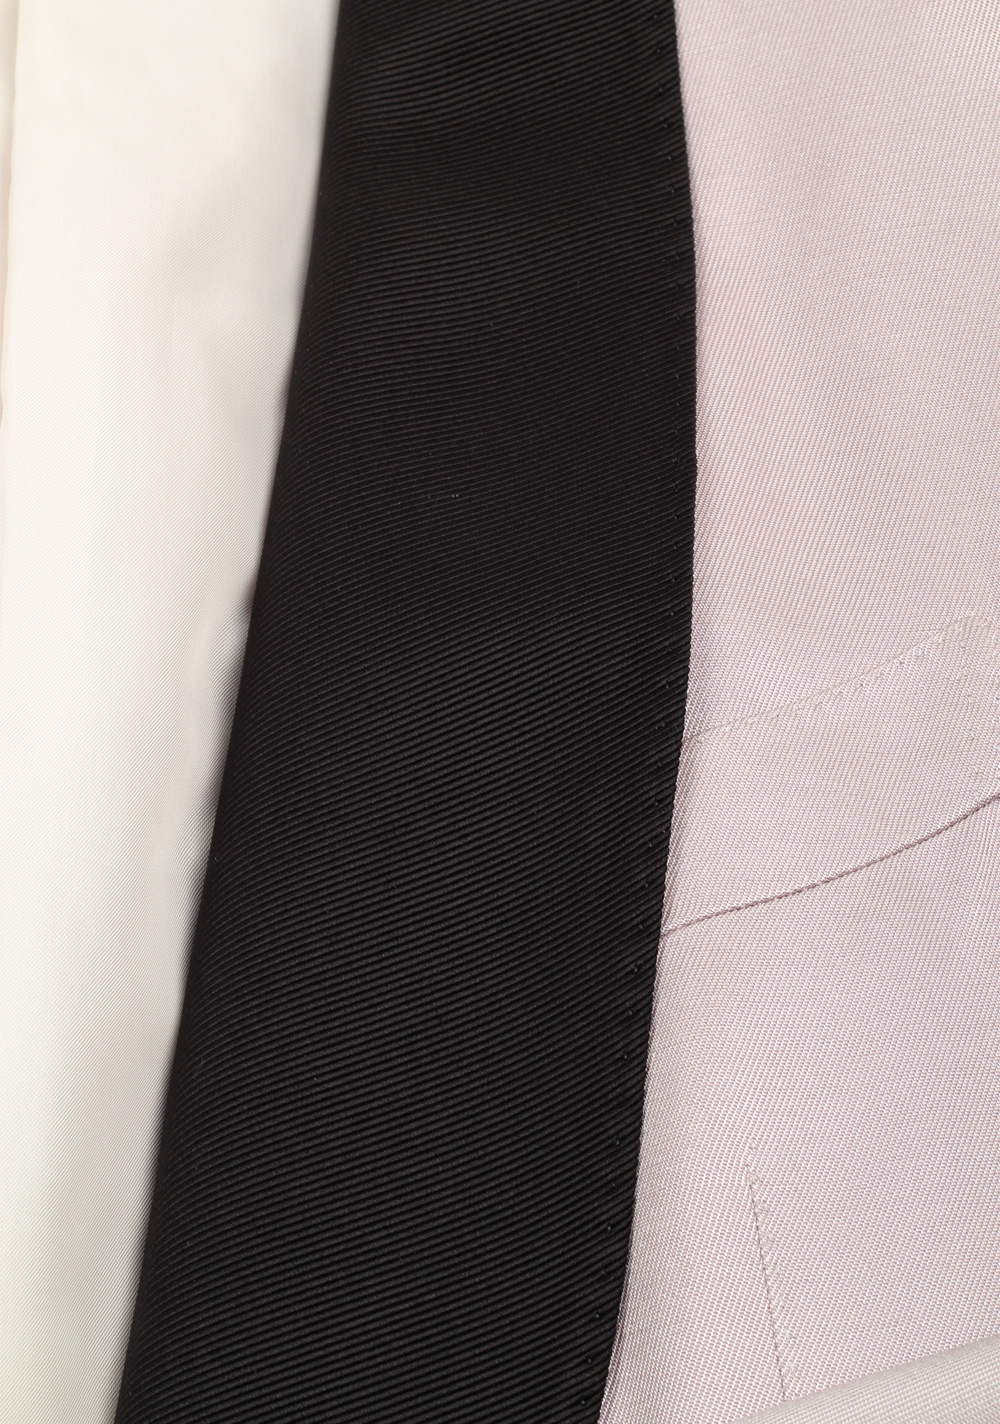 TOM FORD Shelton Lilac Tuxedo Dinner Jacket Size 46 / 36R U.S. | Costume Limité